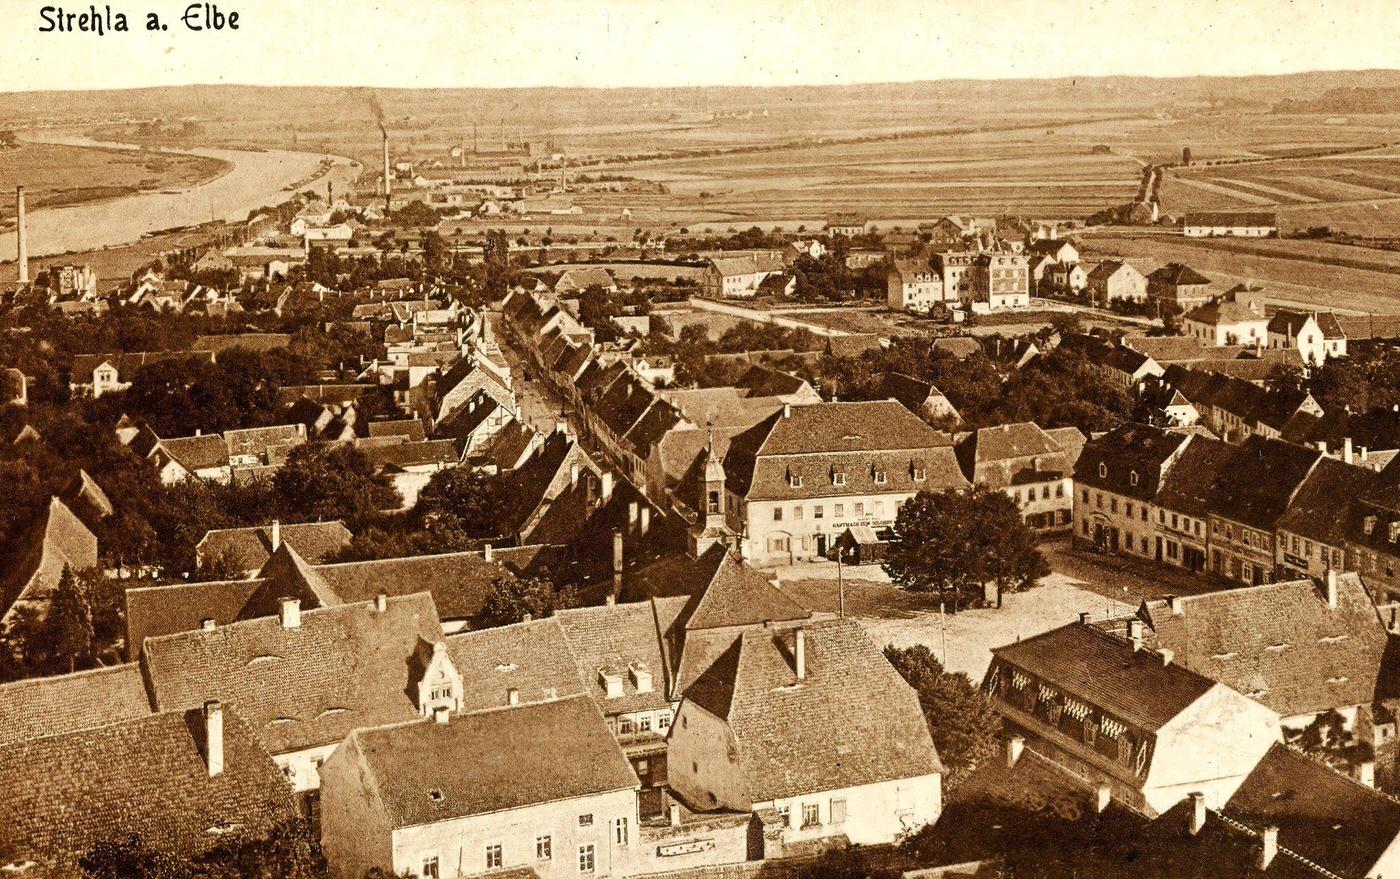 Elbe in Saxony, Strehla, Germany, 1903.